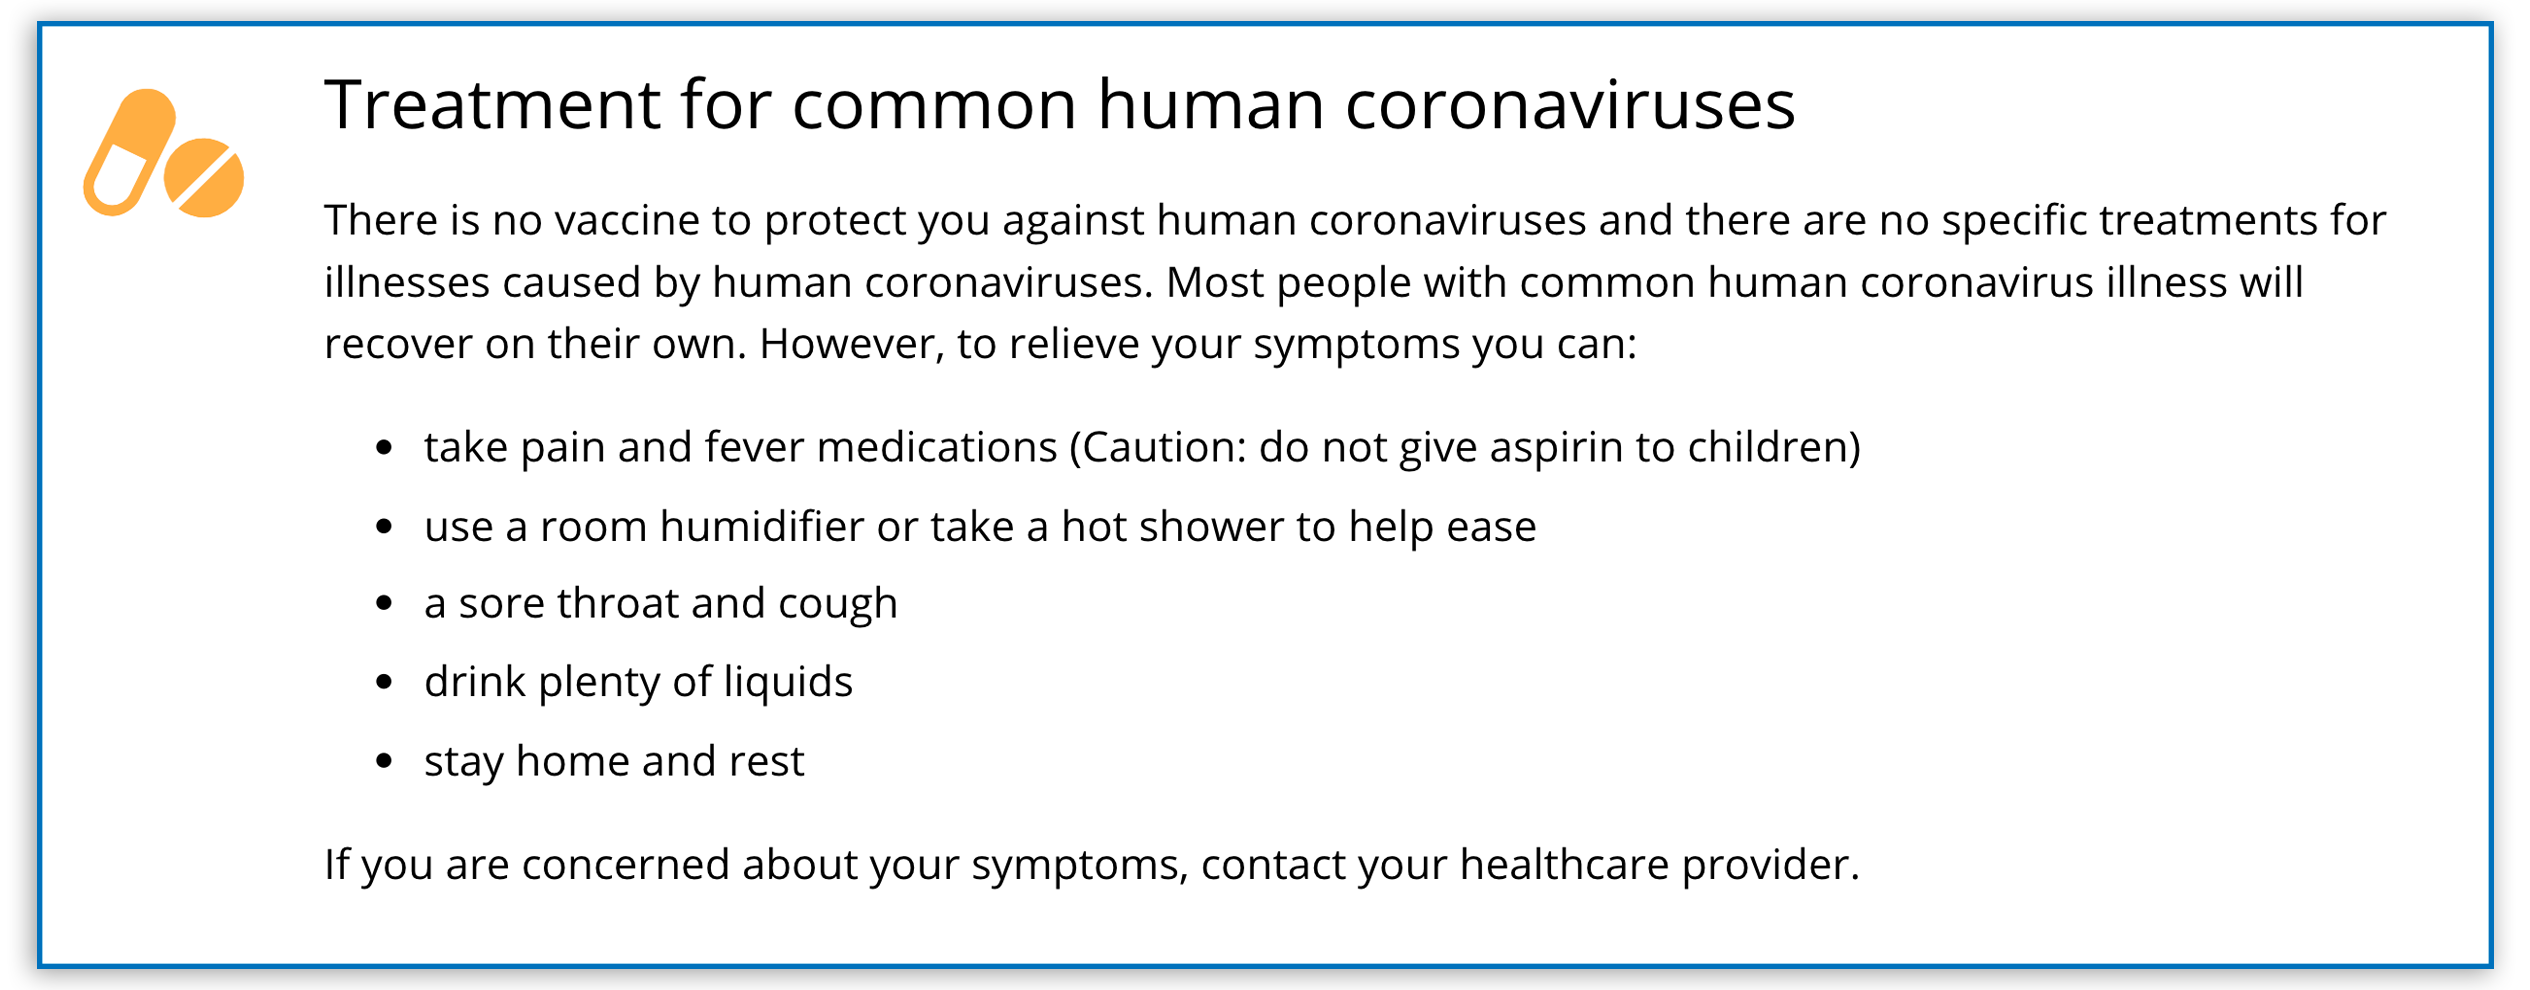 Treating Coronavirus with Humidifiers